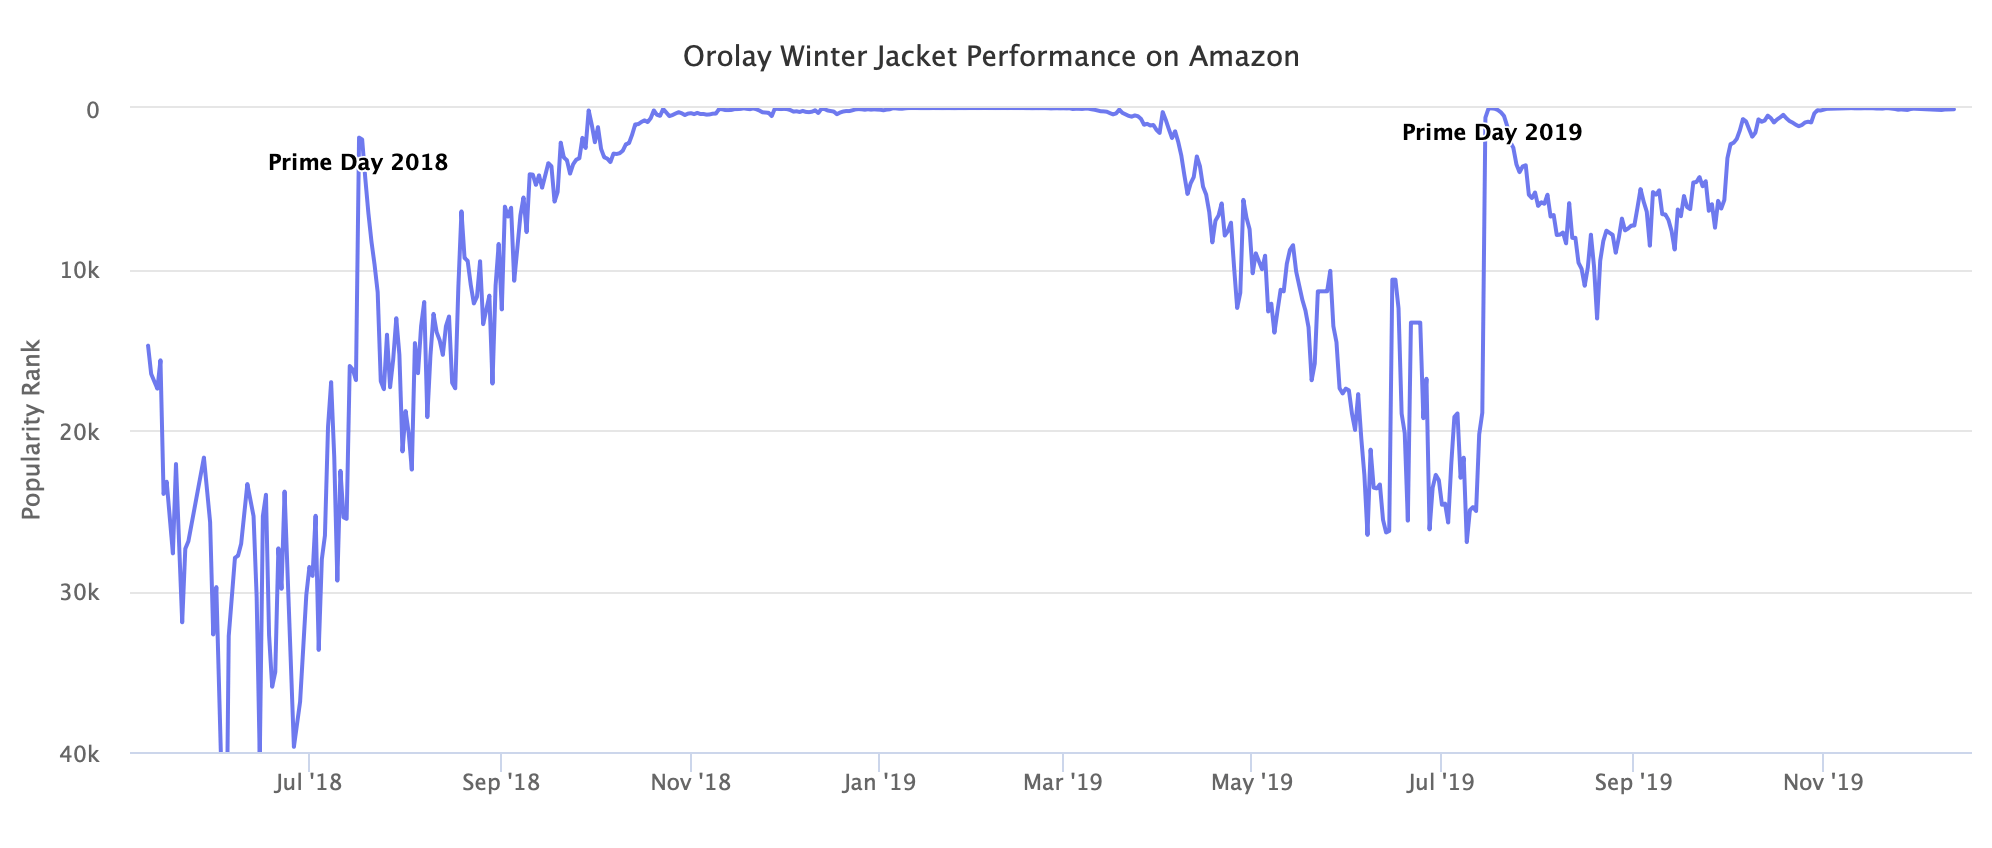 Orolay Winter Jacket Performance on Amazon